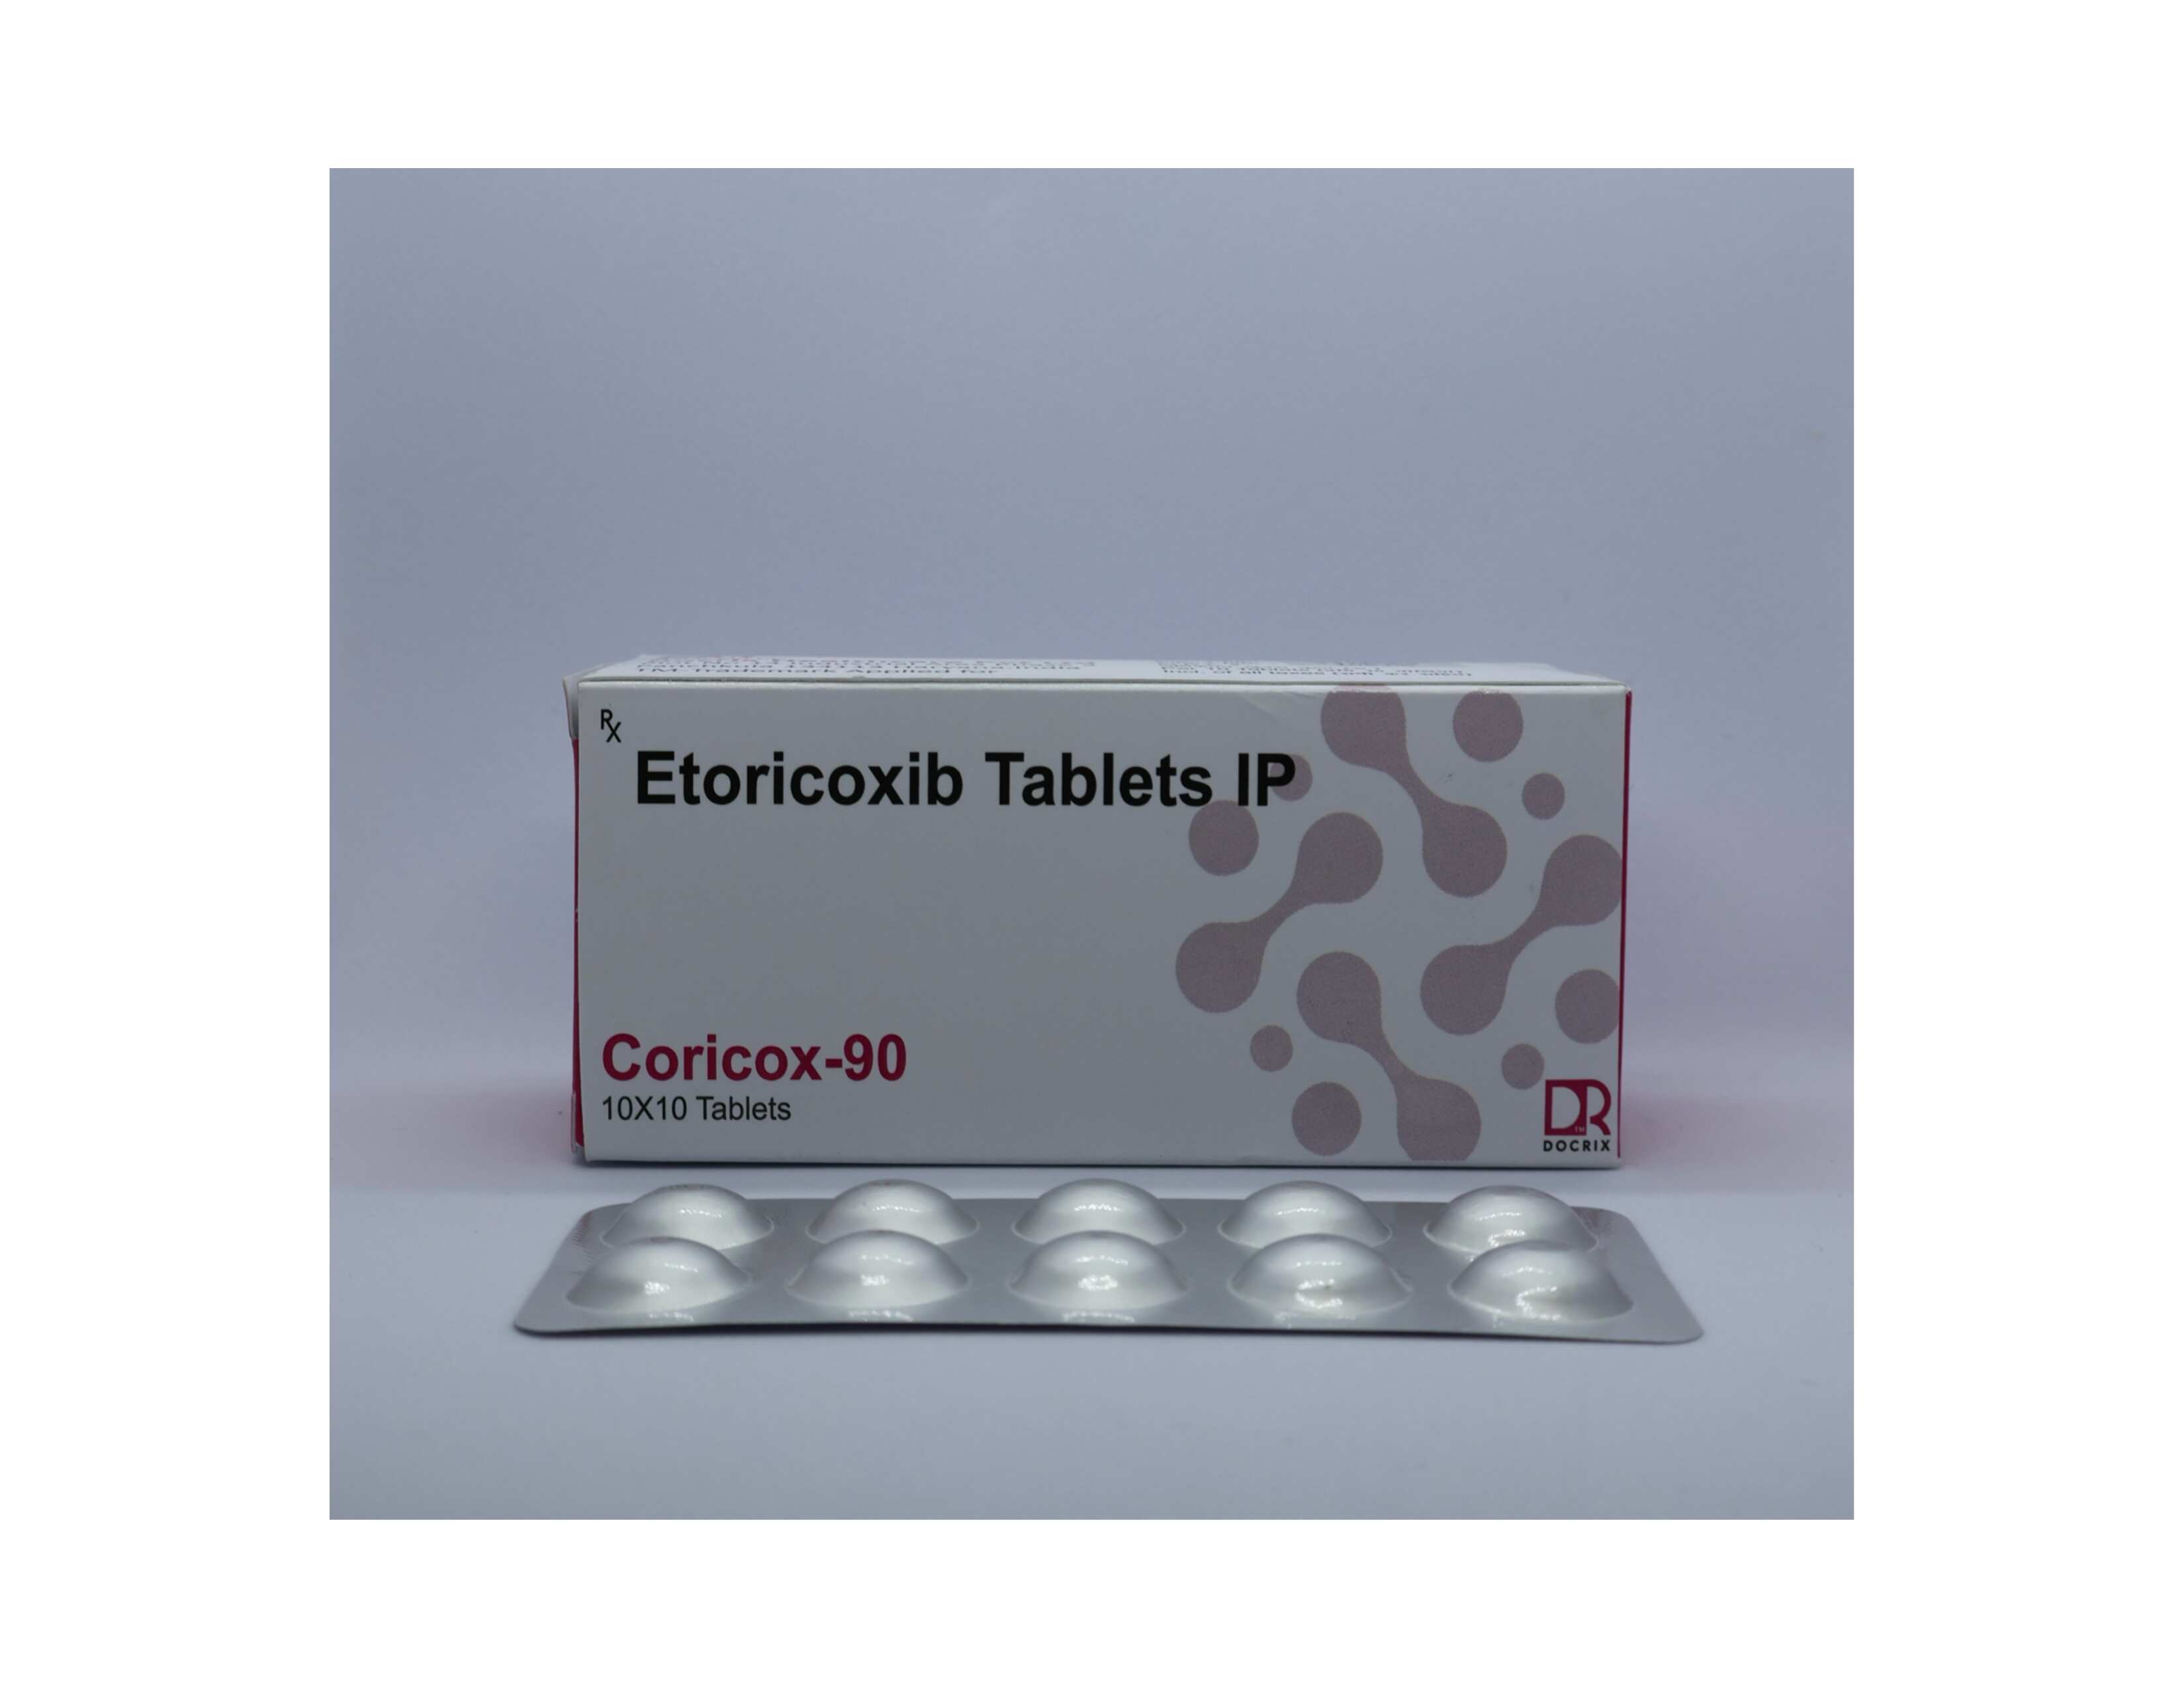 Product Name: Coricox 90, Compositions of Coricox 90 are Etoricoxib Tablets IP - Docrix Healthcare